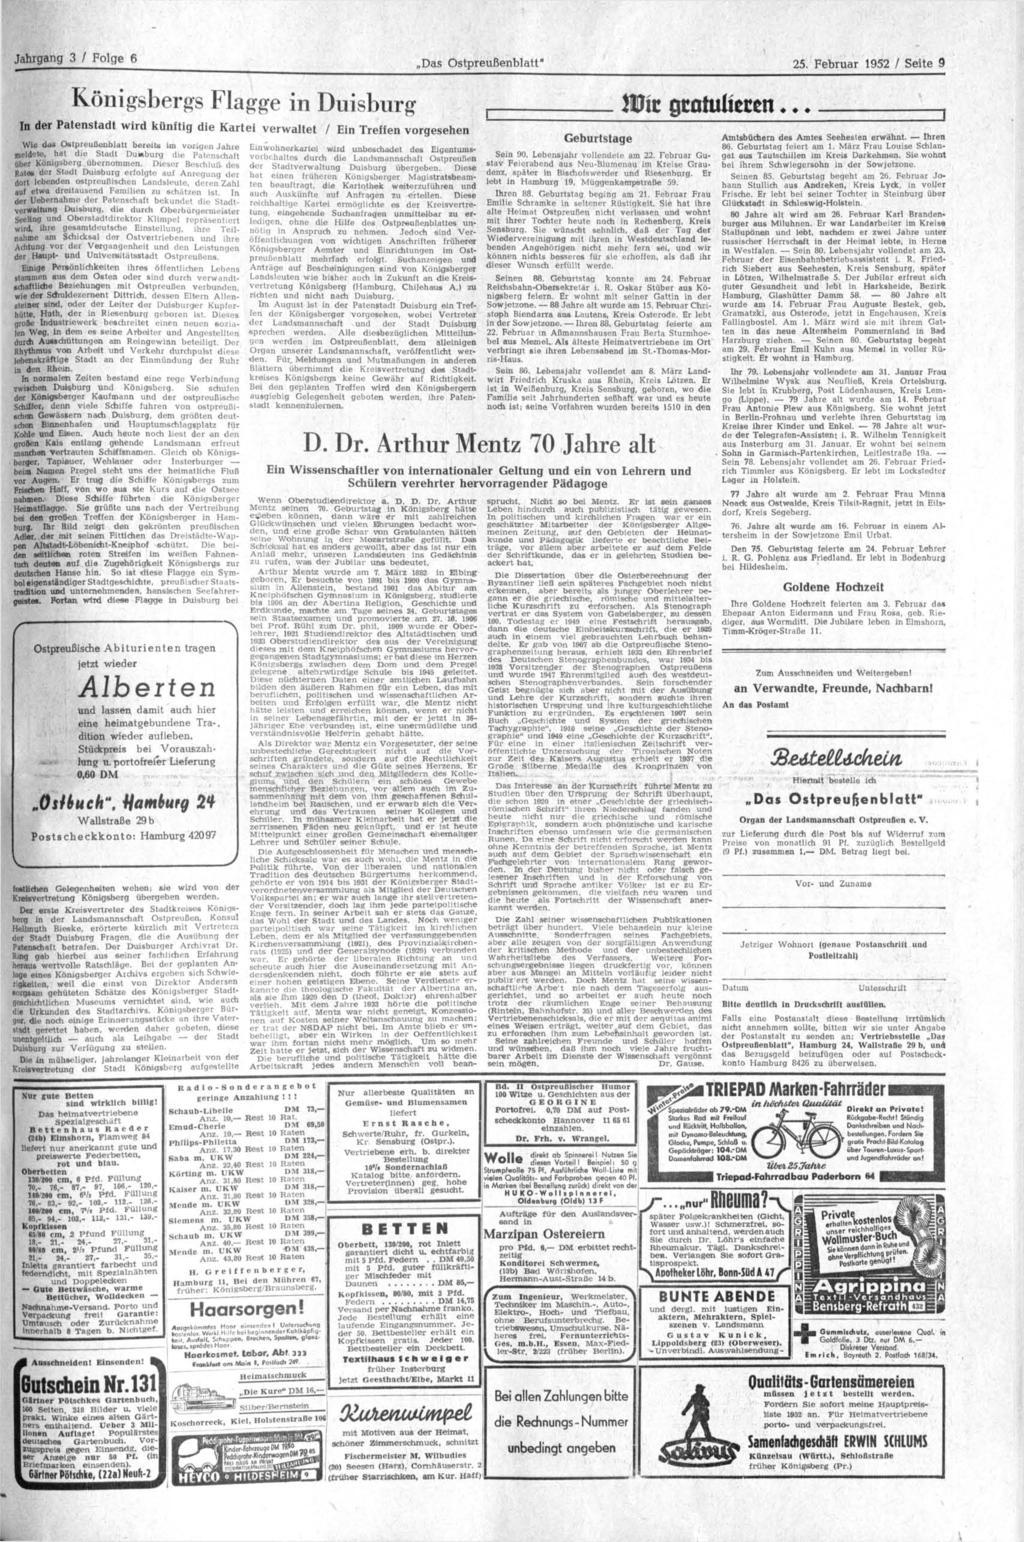 Jahrgang 3 / Folge 6 Das Ostpreußenblatt" 25. Februar 1952 / Seite 9 Königsbergs Flagge in Duisburg Wk g r a t u l i e r e n.